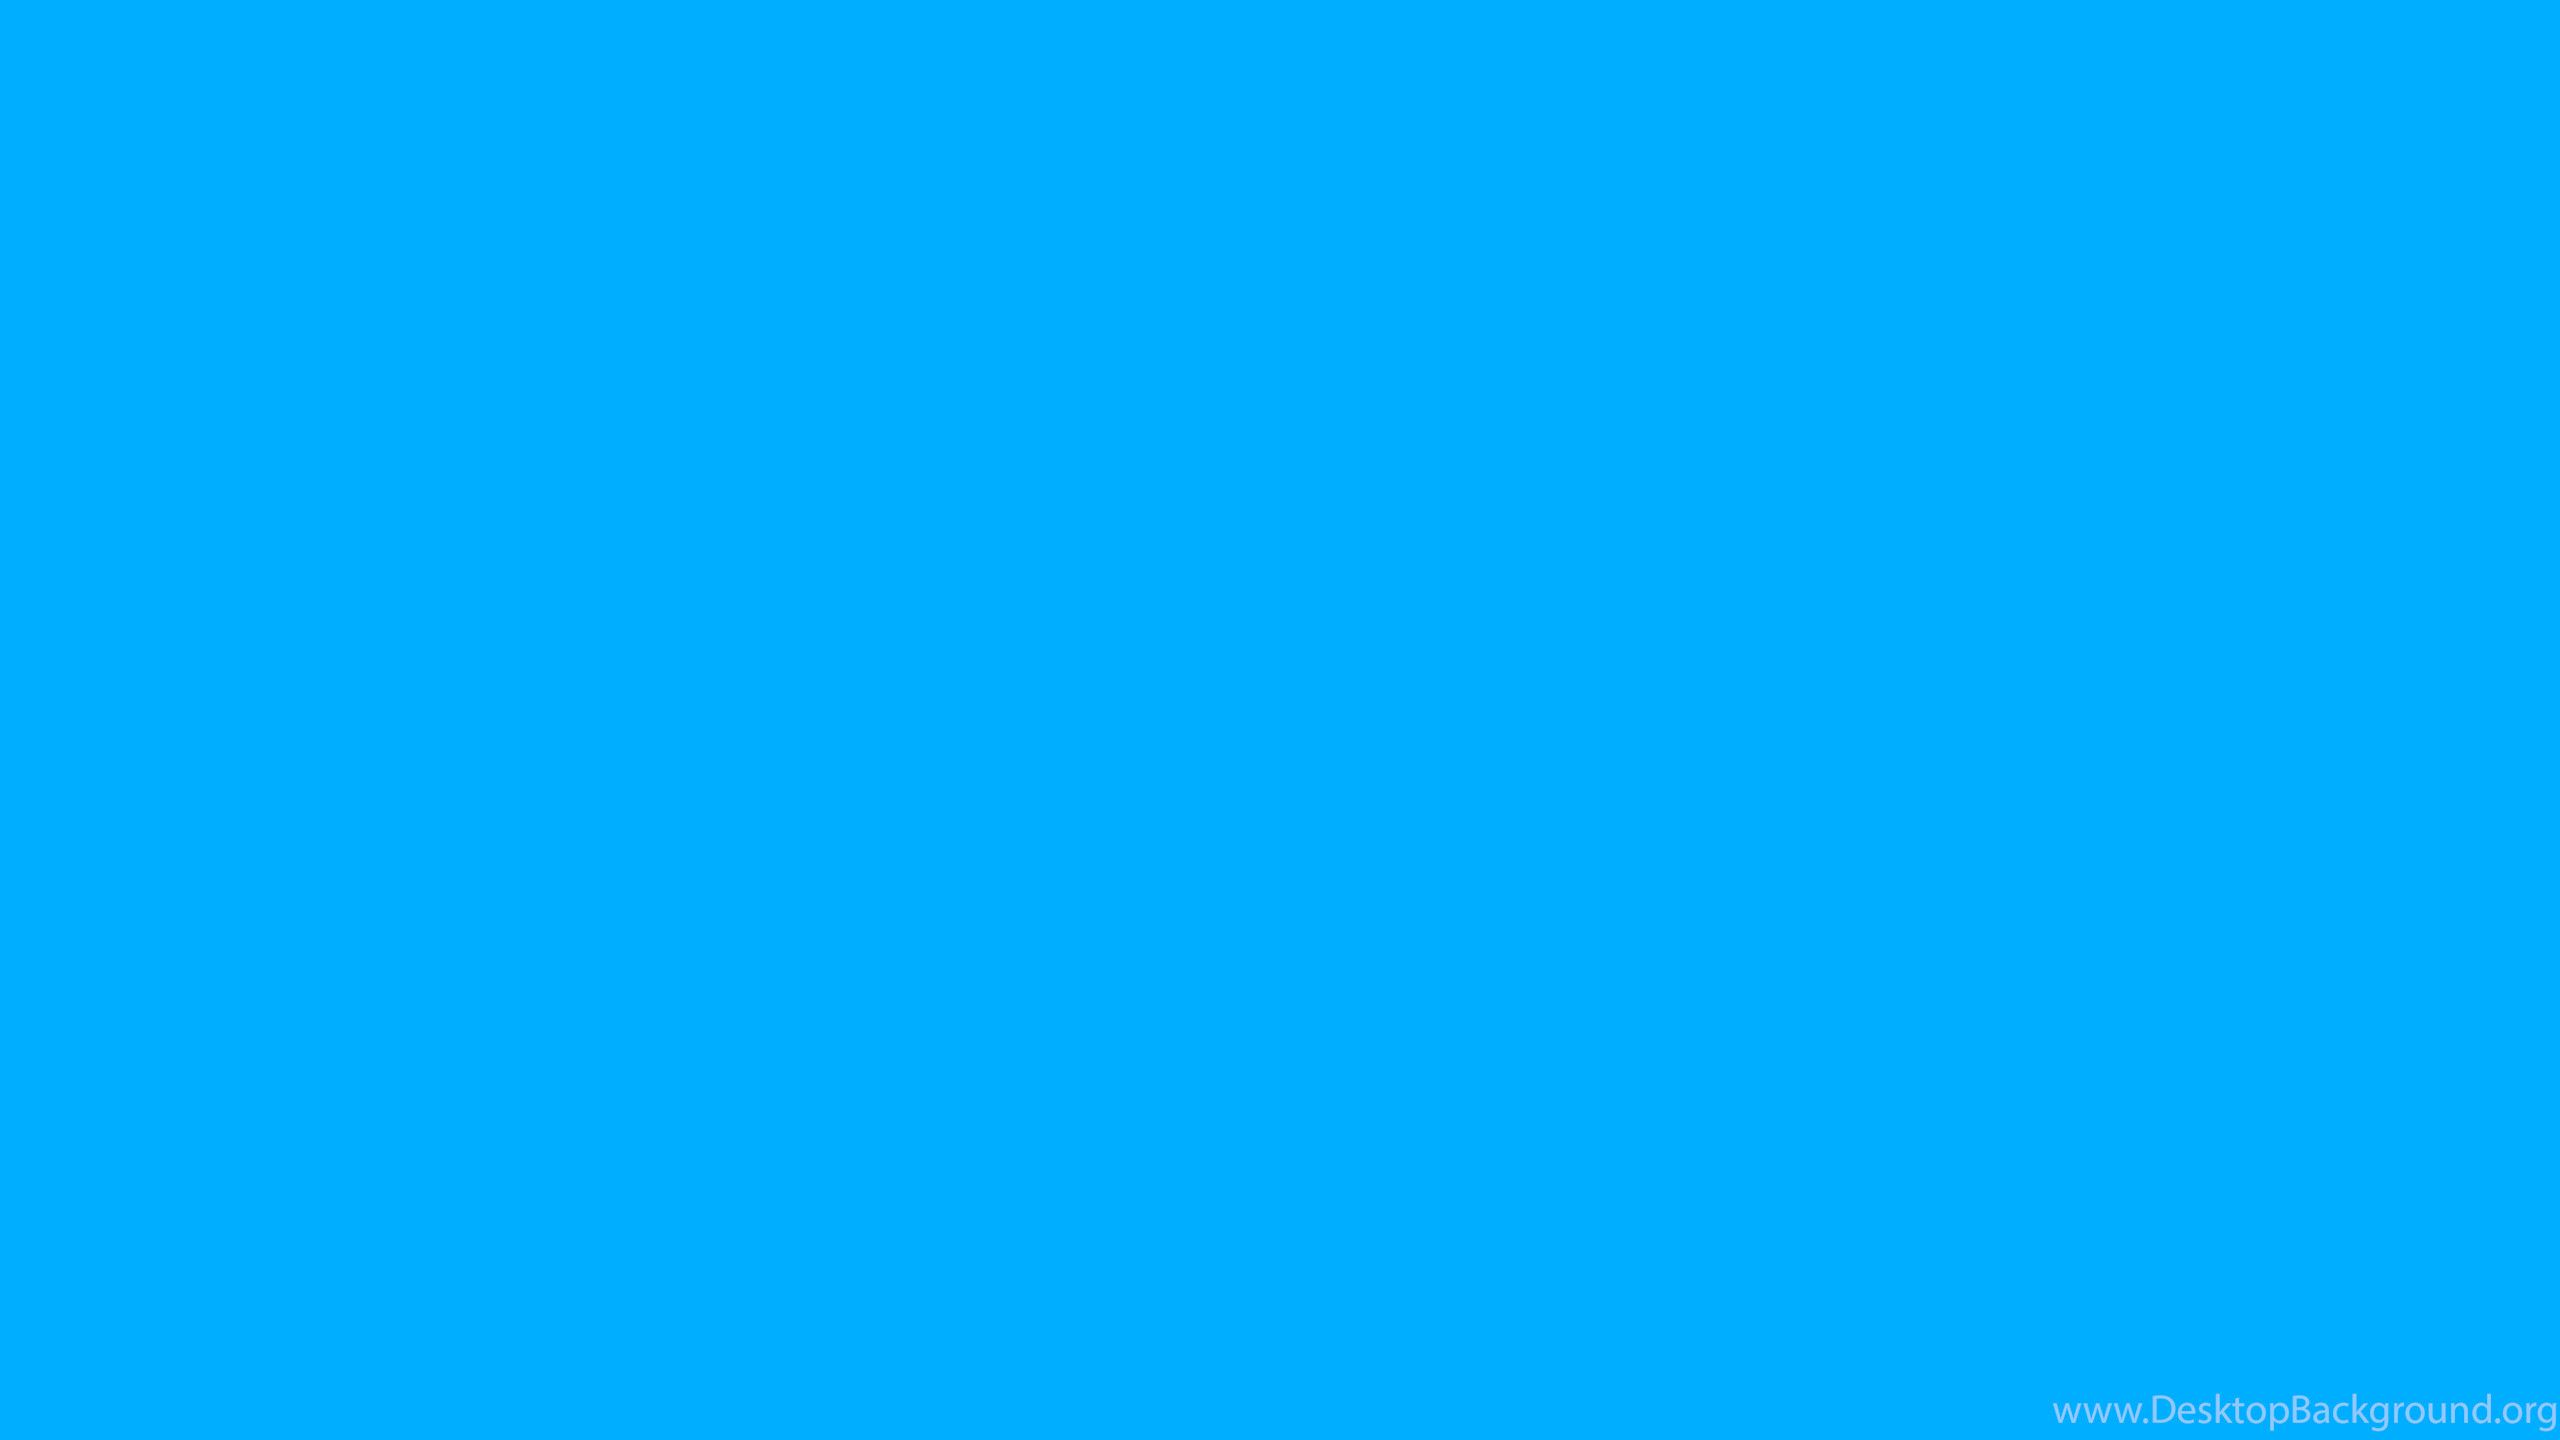 Wallpaper Blue Azure Aqua Cloud Electric Blue Background  Download  Free Image